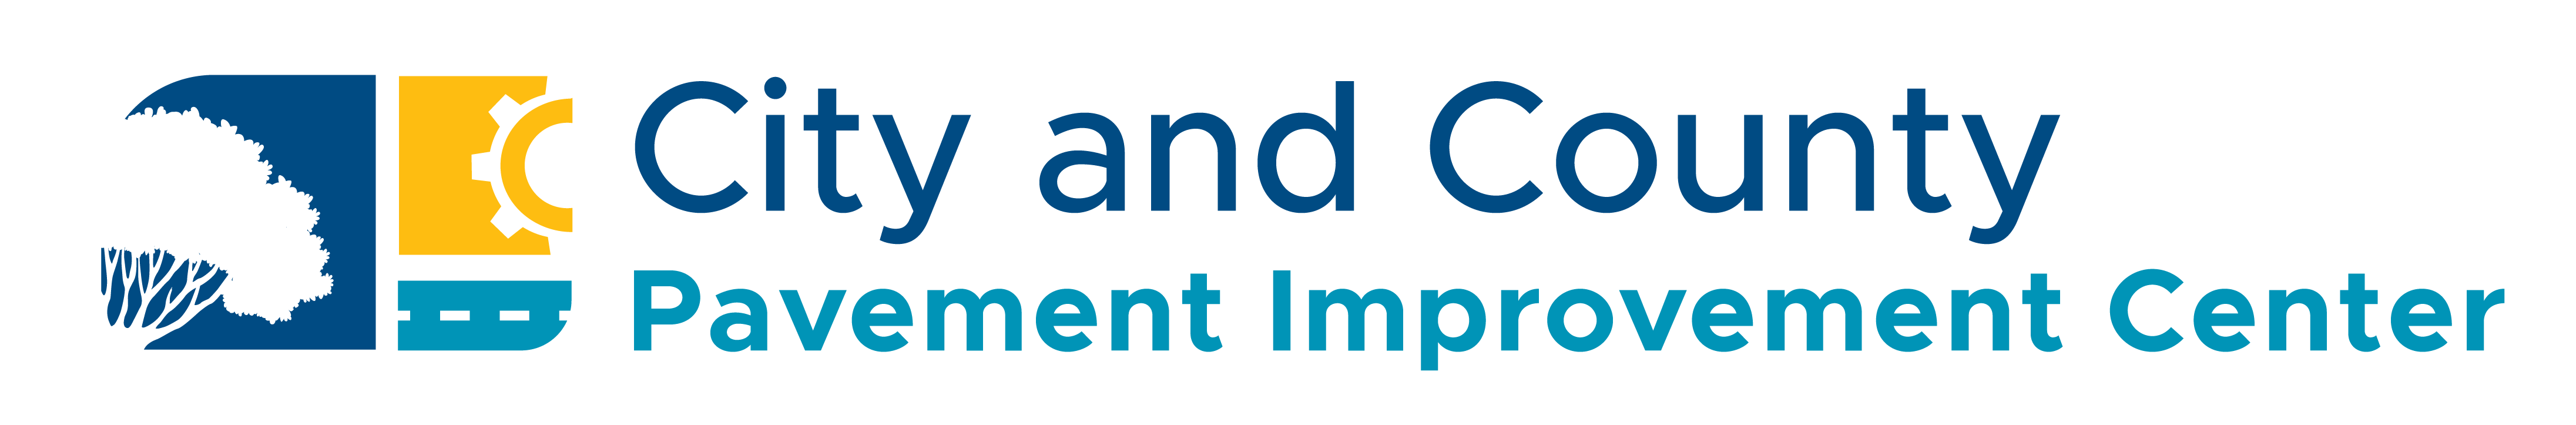 CCPIC logo